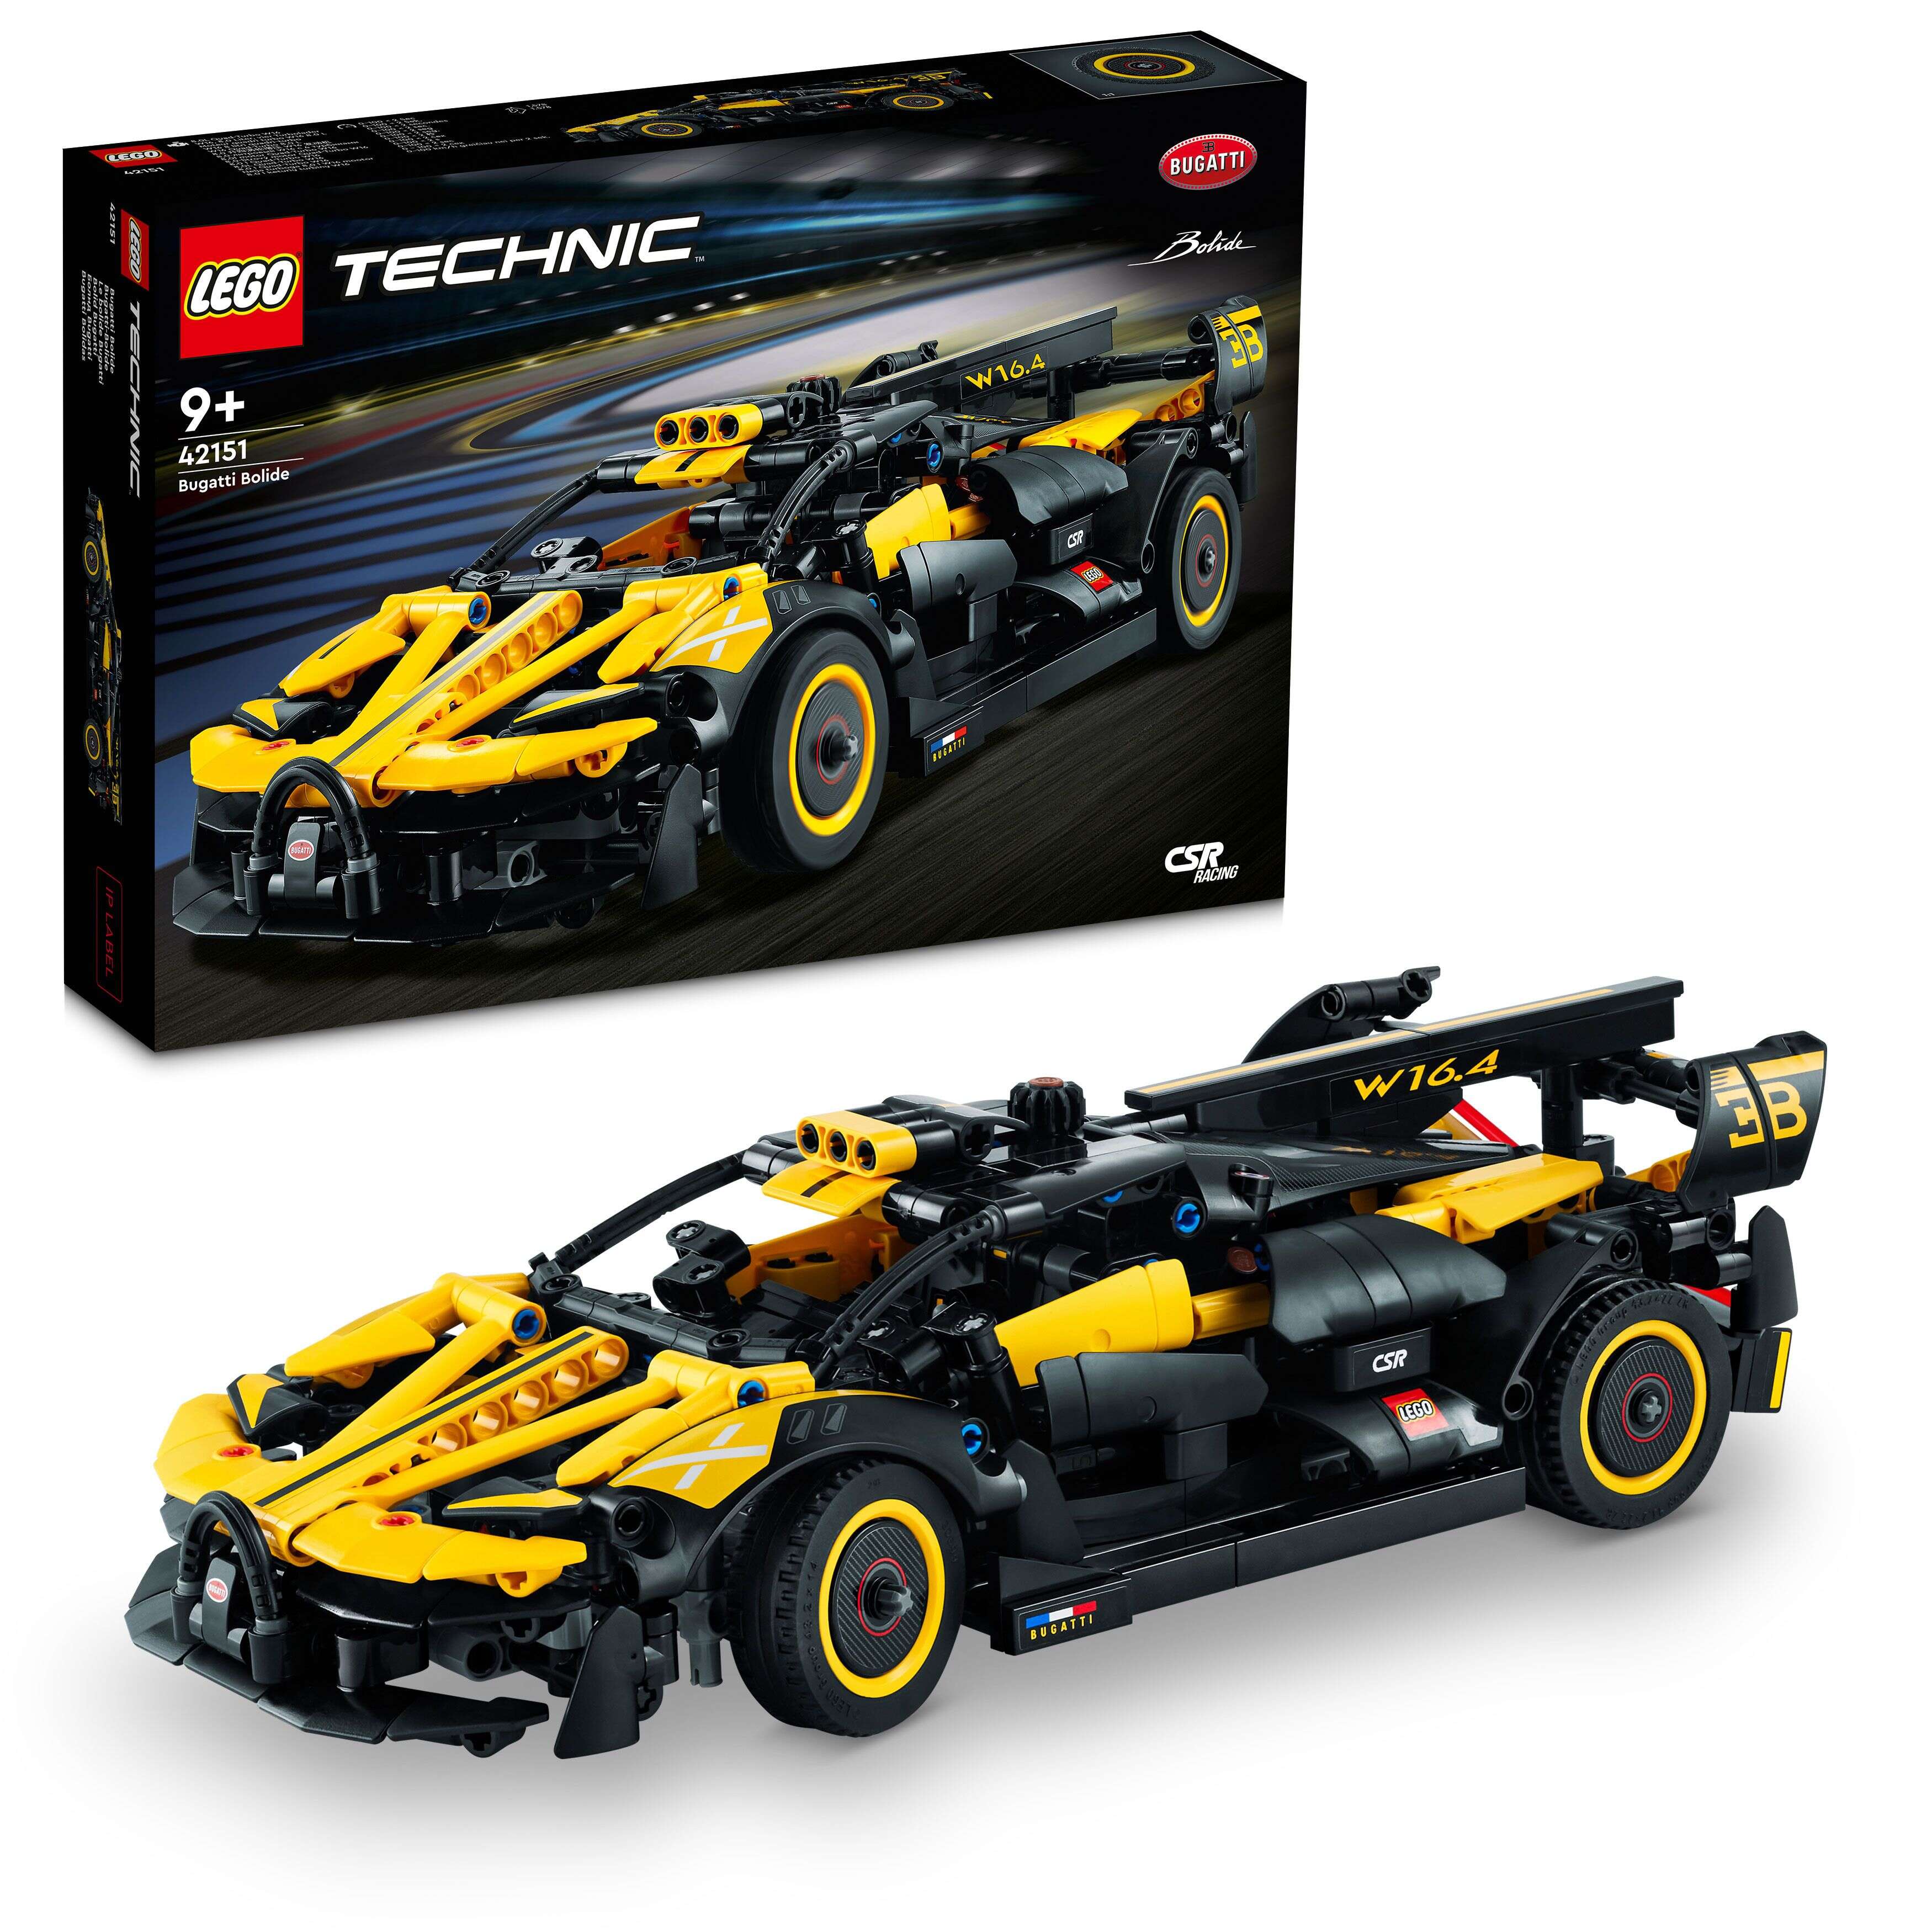 LEGO 42151 Technic Bugatti-Bolide, Sammlerstück, funktionierender W16-Motor